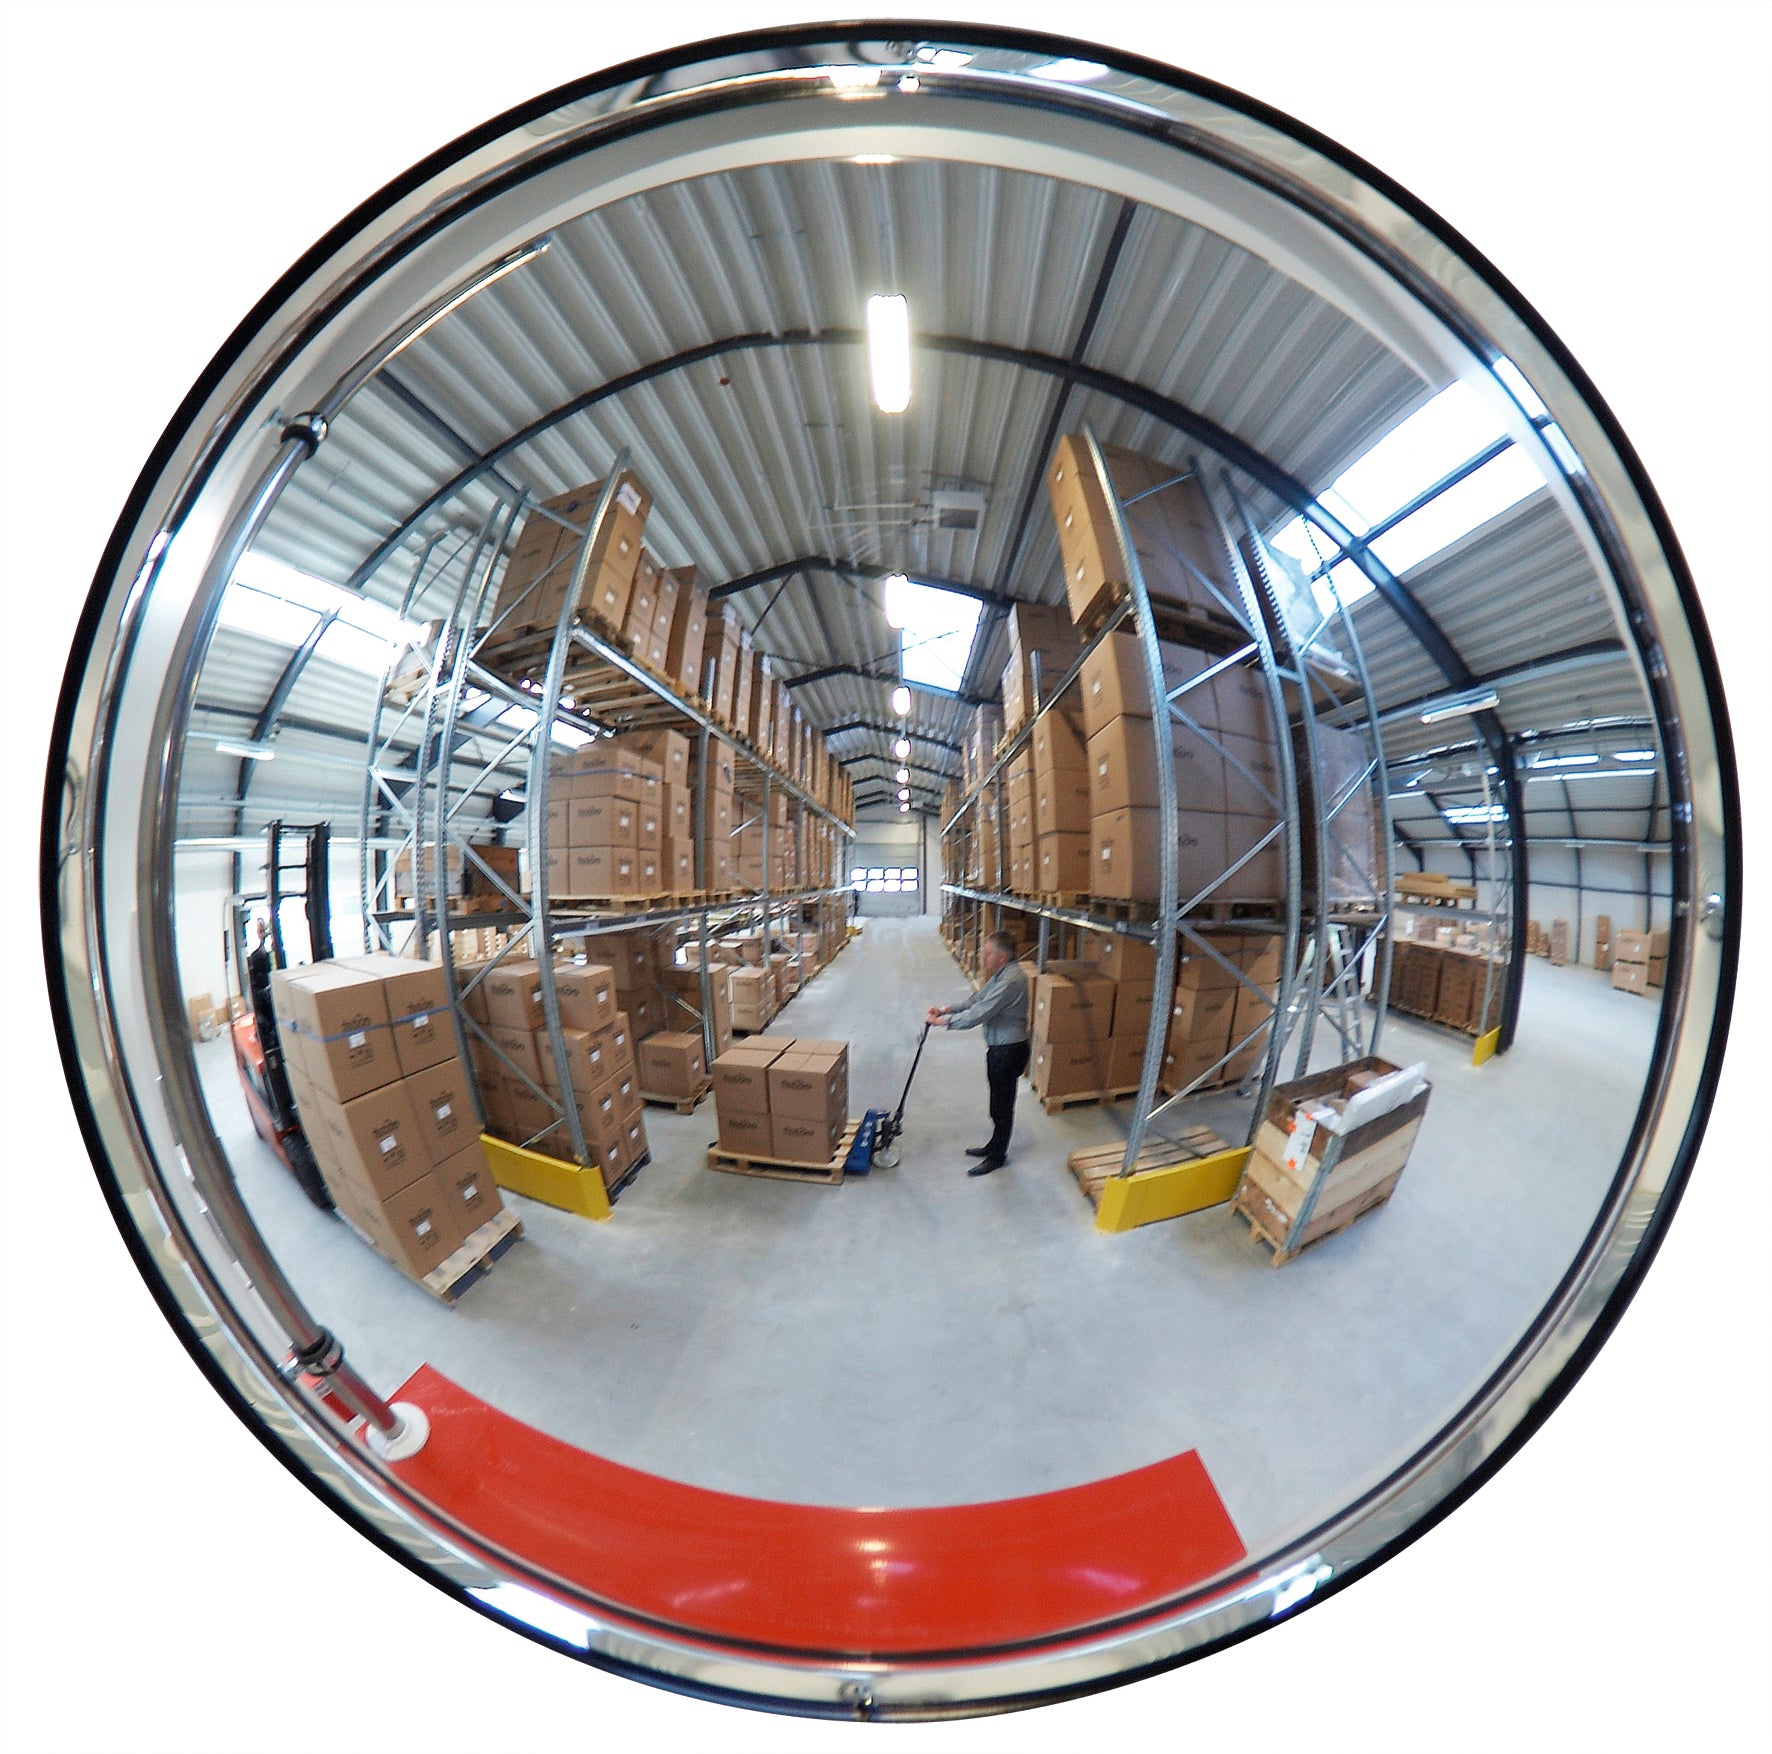 Convex mirror in warehouse